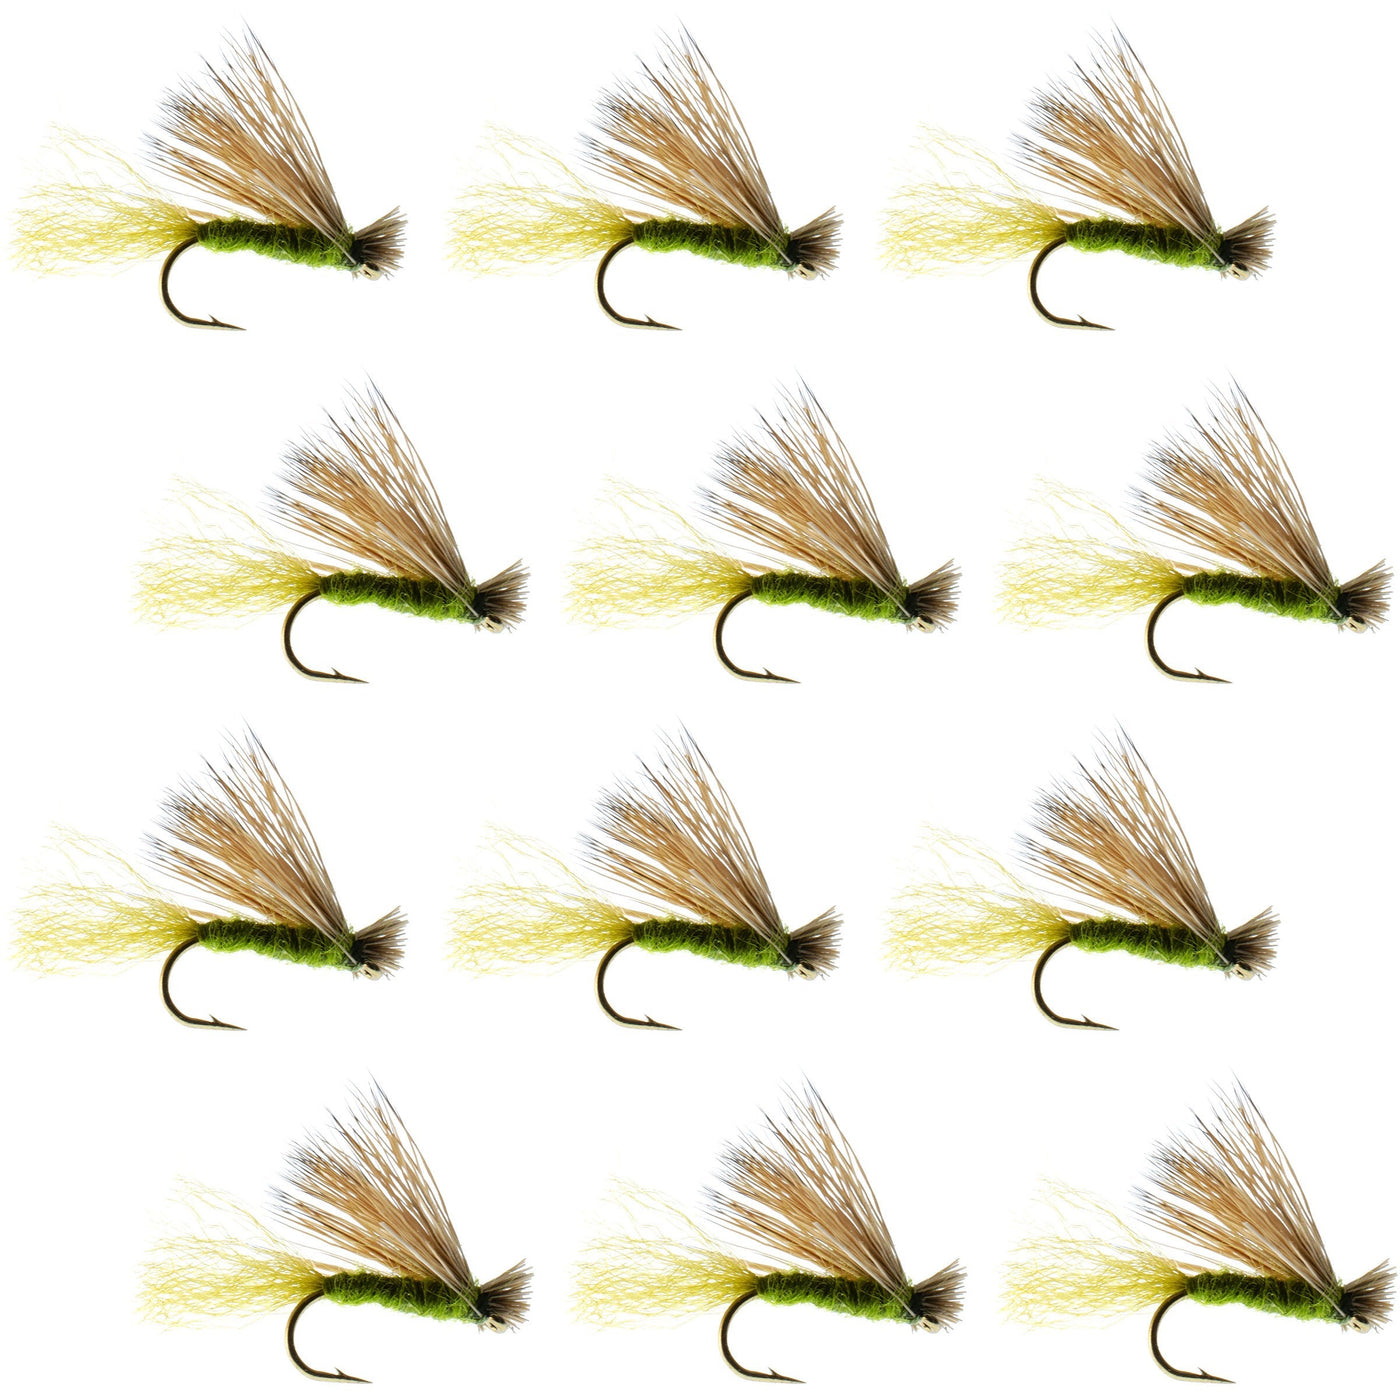 Olive X Caddis Emerging Caddis Adult Trout Dry Fly - 1 Dozen Flies Hook Size 16